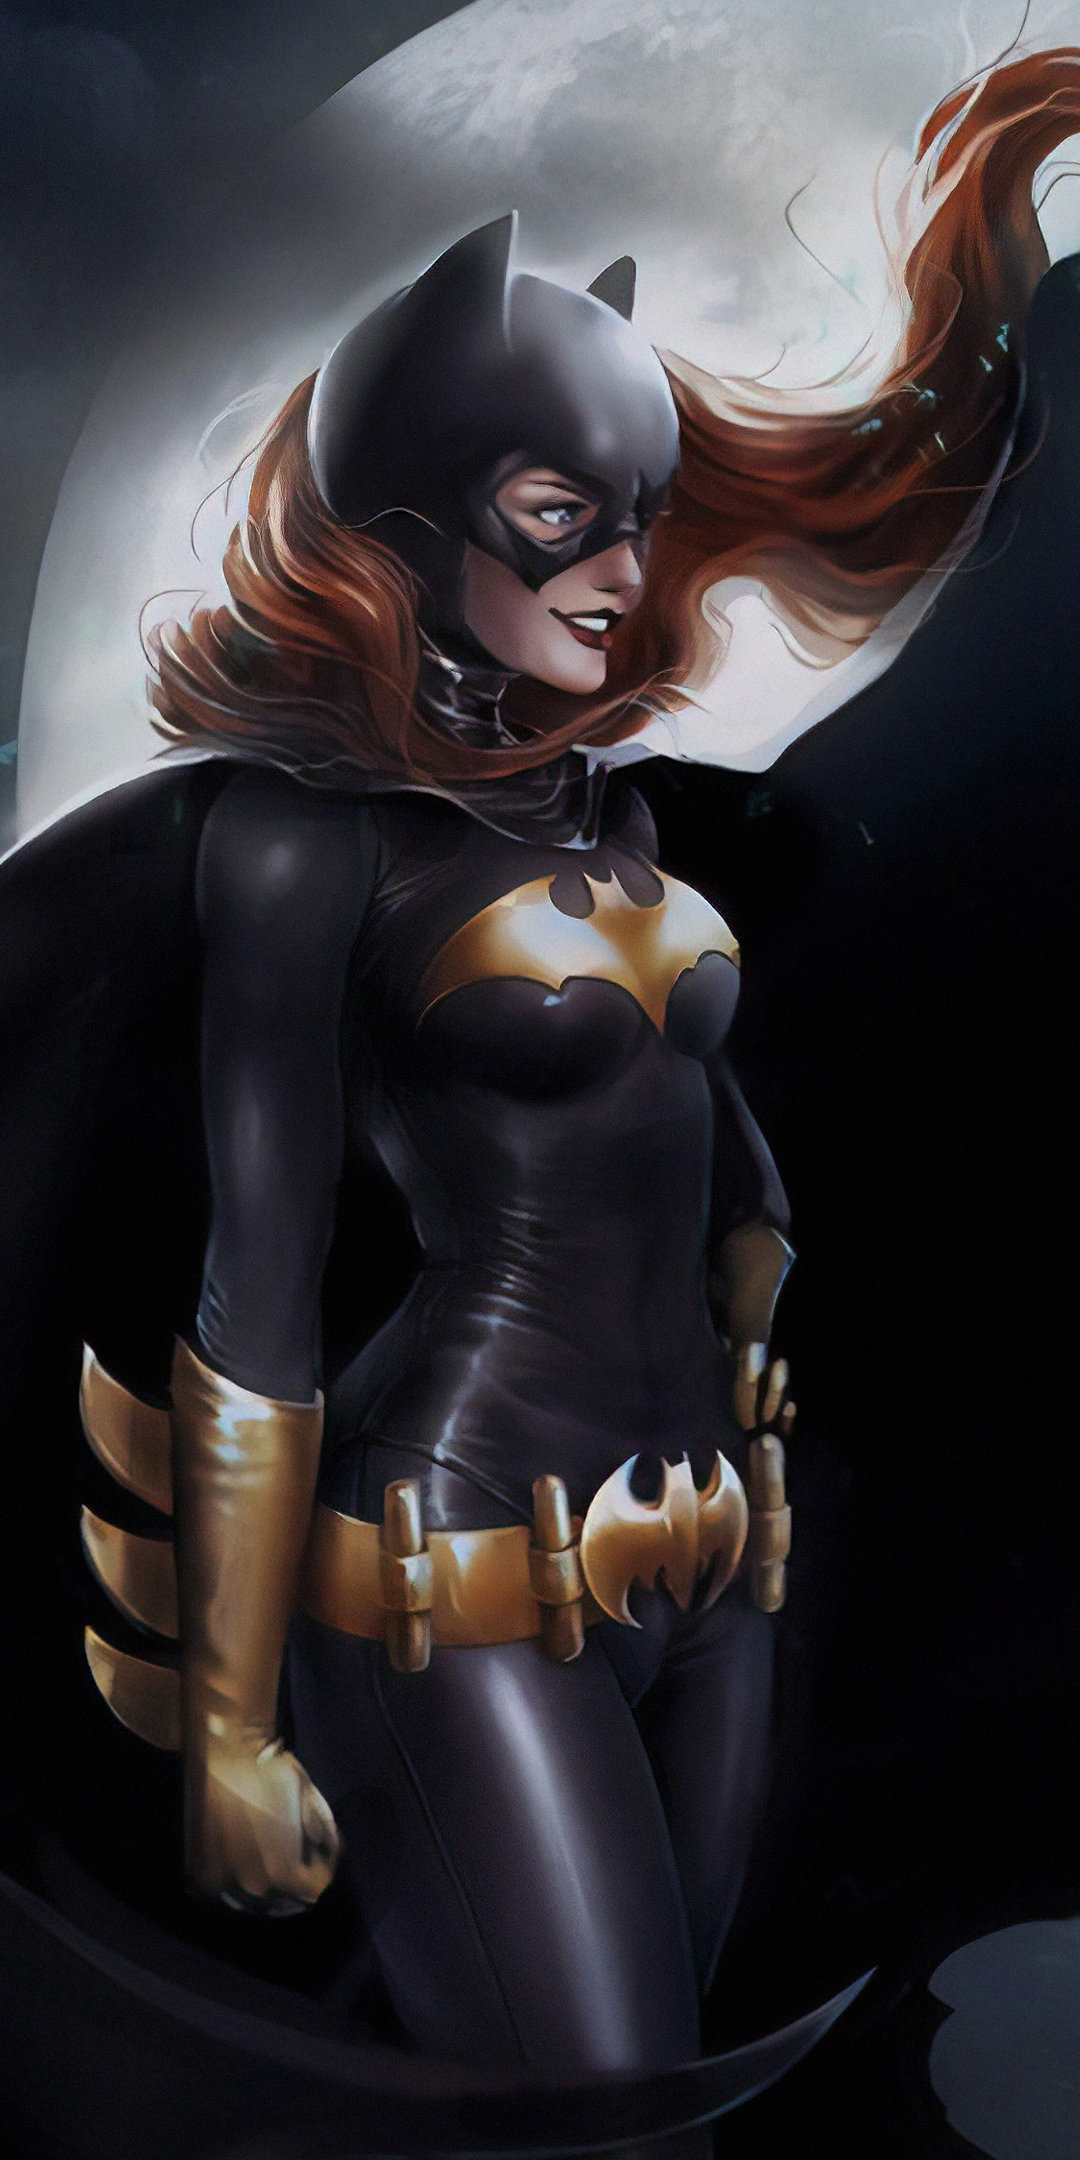 DC Batgirl Digital 2020 Art Wallpaper, HD Superheroes 4K Wallpapers, Images  and Background - Wallpapers Den